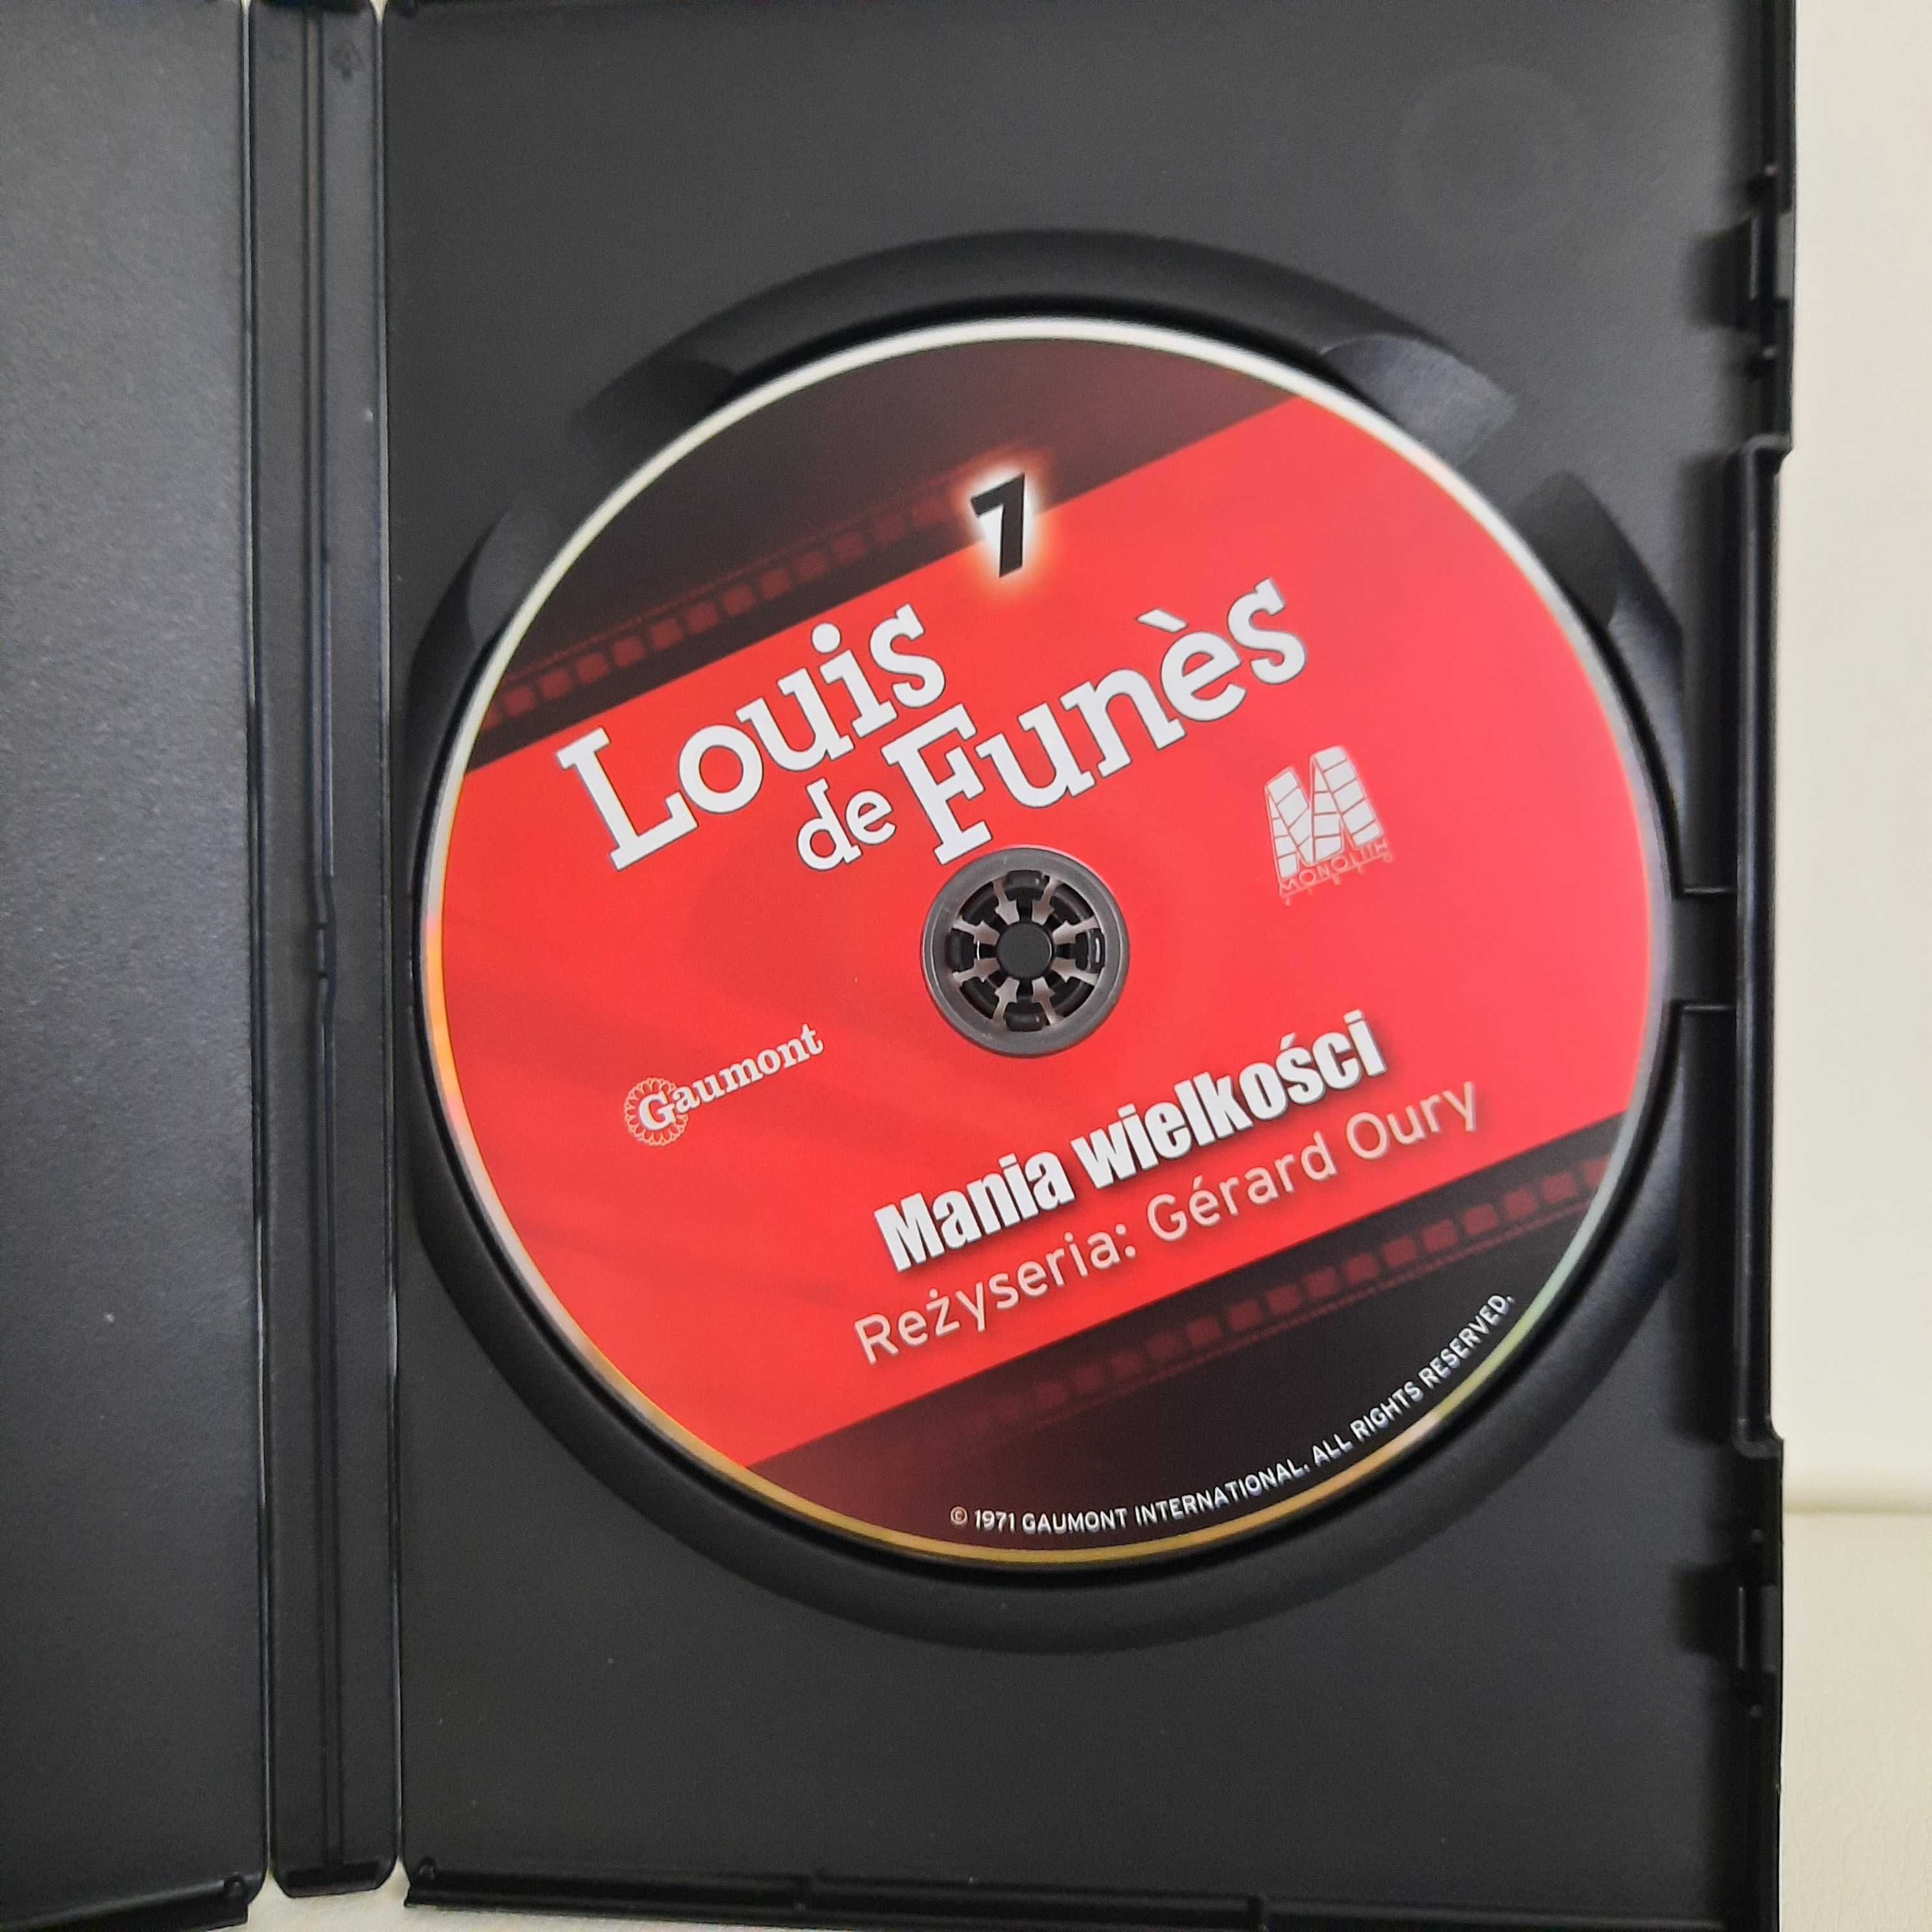 MANIA WIELKOŚCI (Louis De Funes) DVD Lektor PL